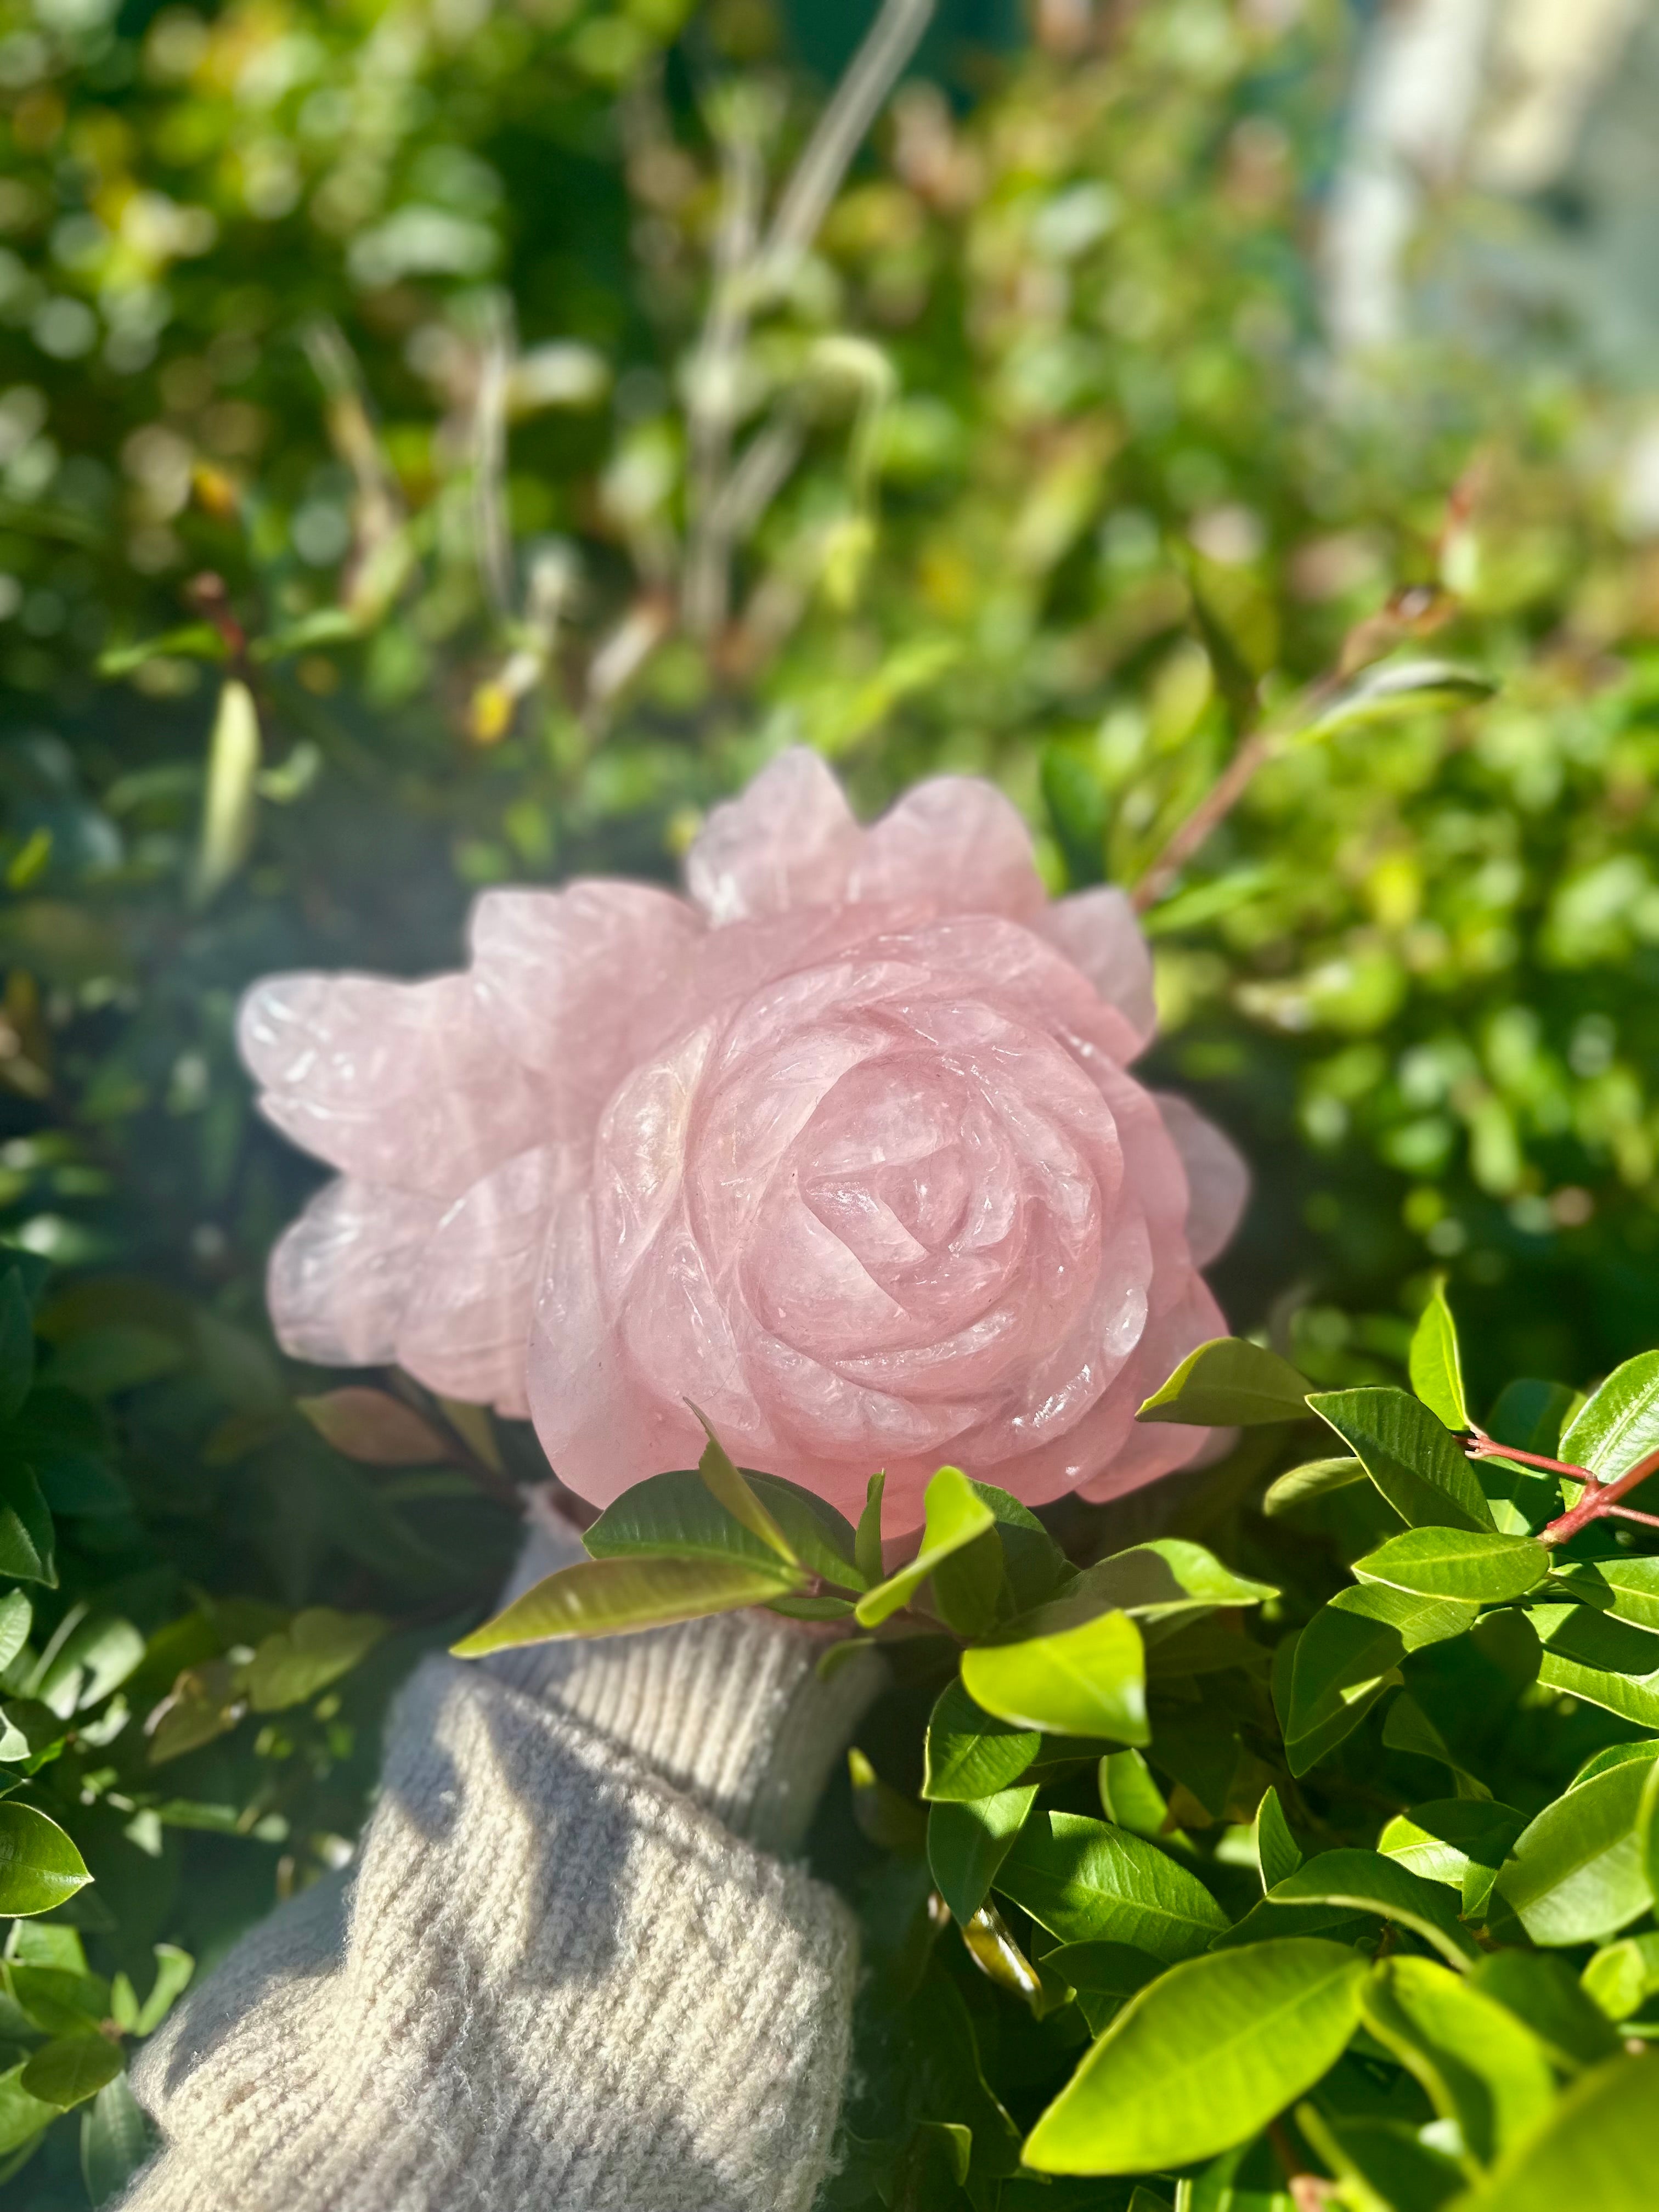 Rose Quartz Rose Carving - Large